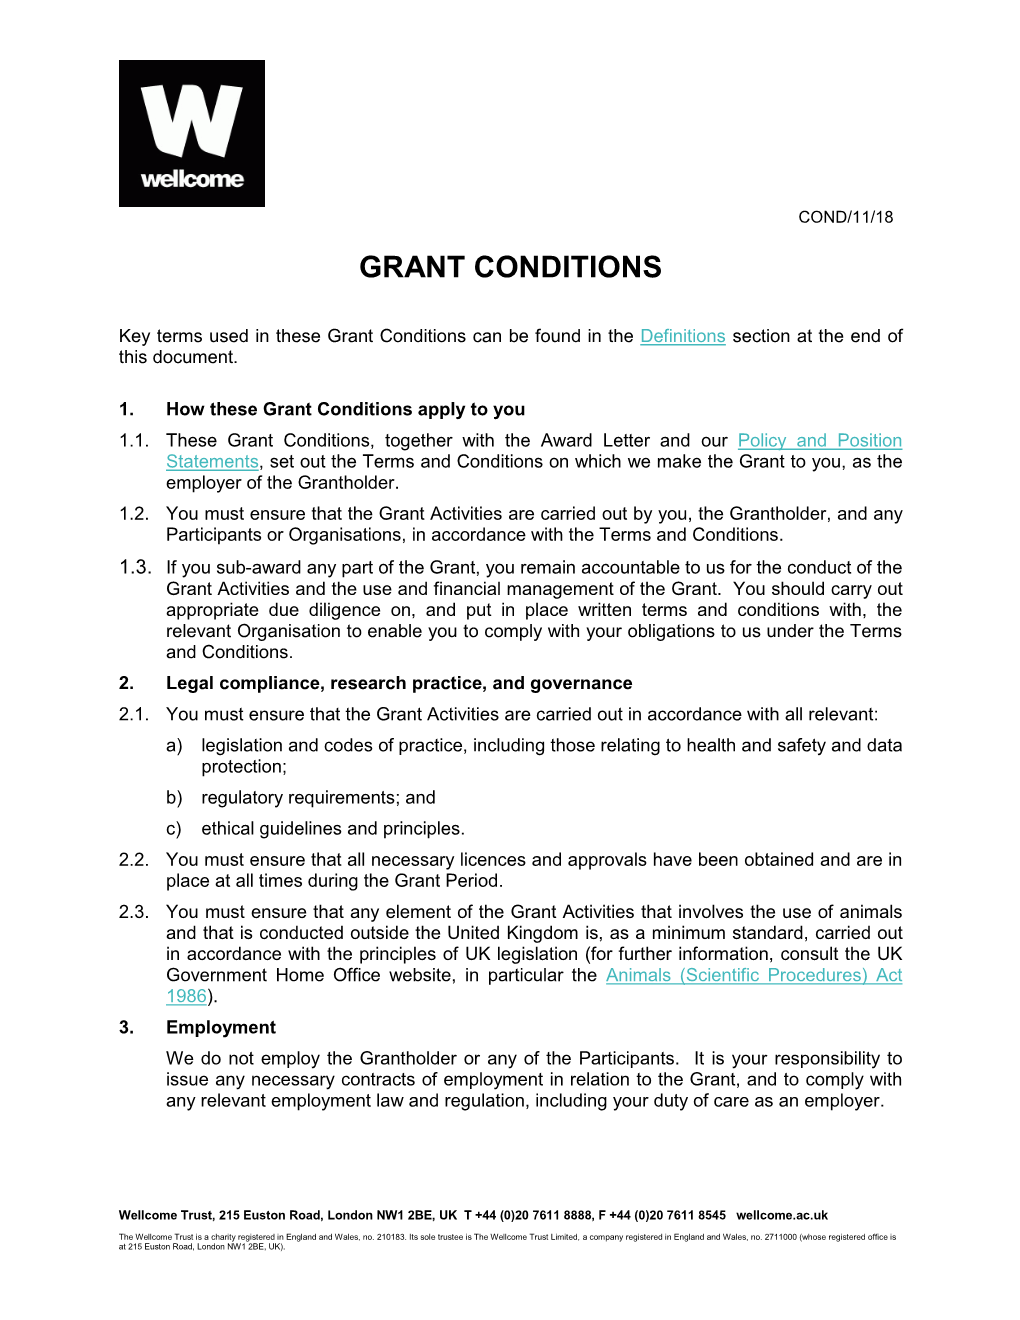 Grant Conditions